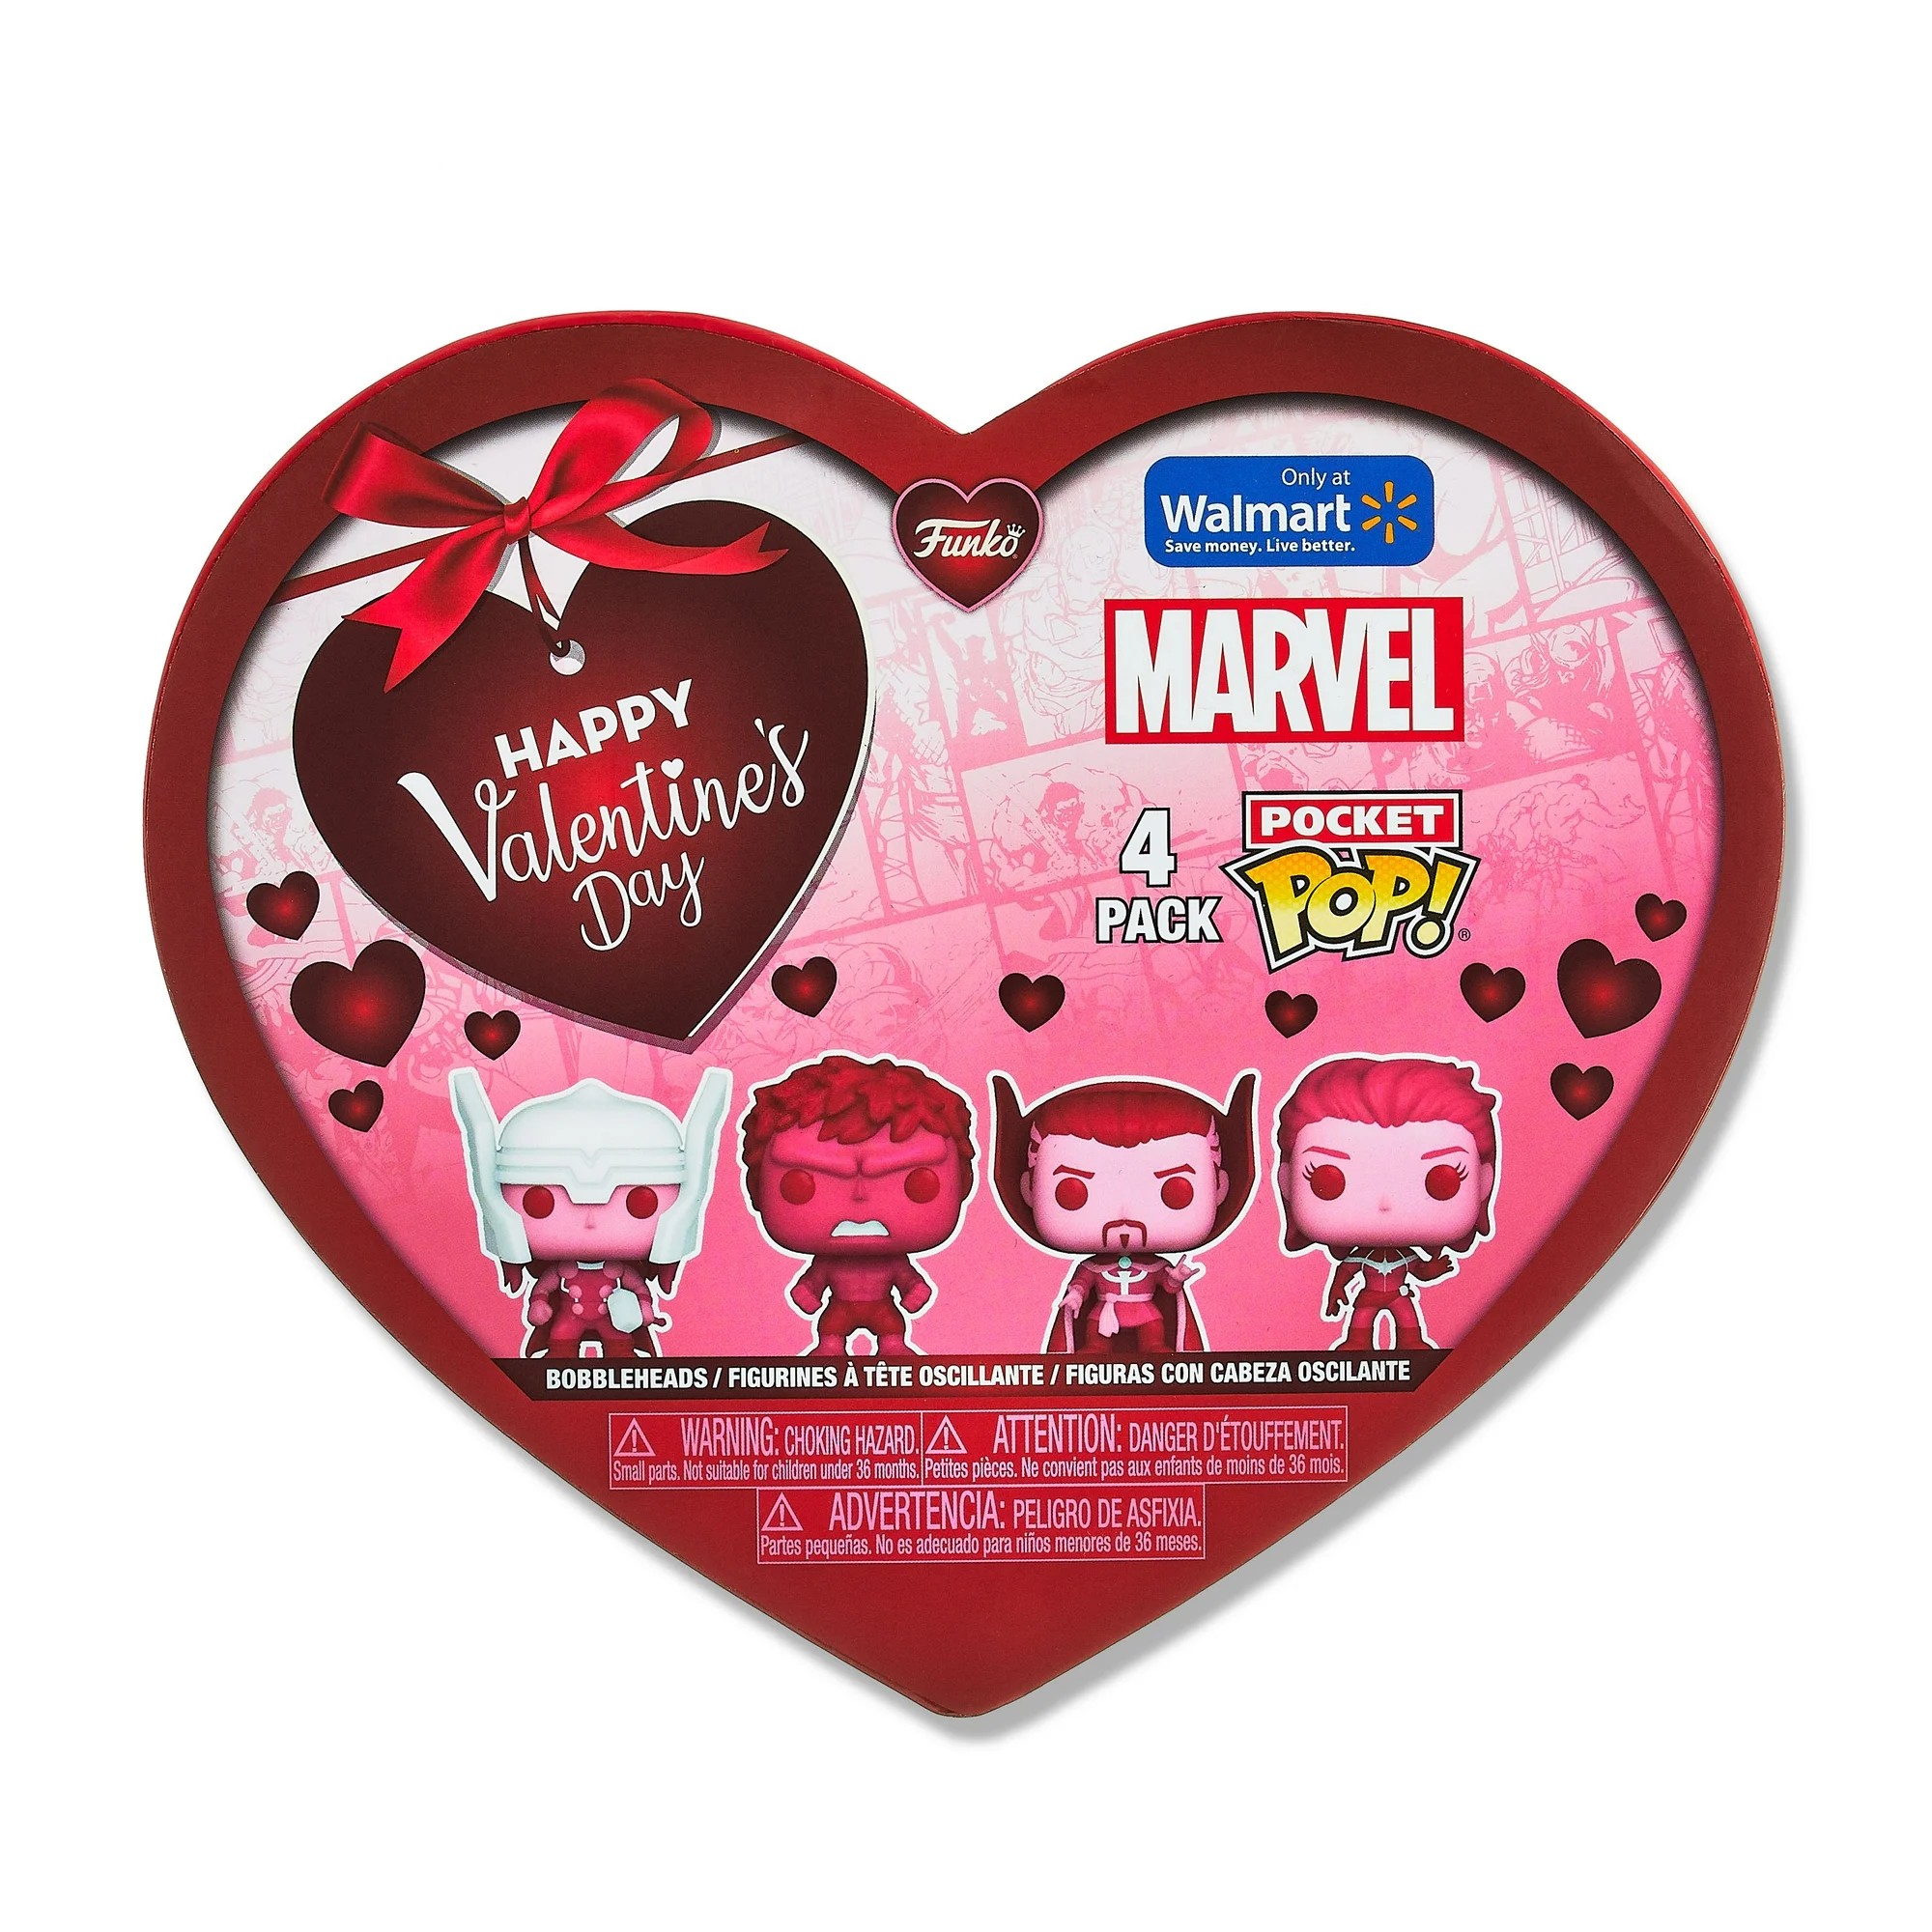  Funko 4-Pack Pocket Pop Marvel Classic - Happy Valentine's Day Box